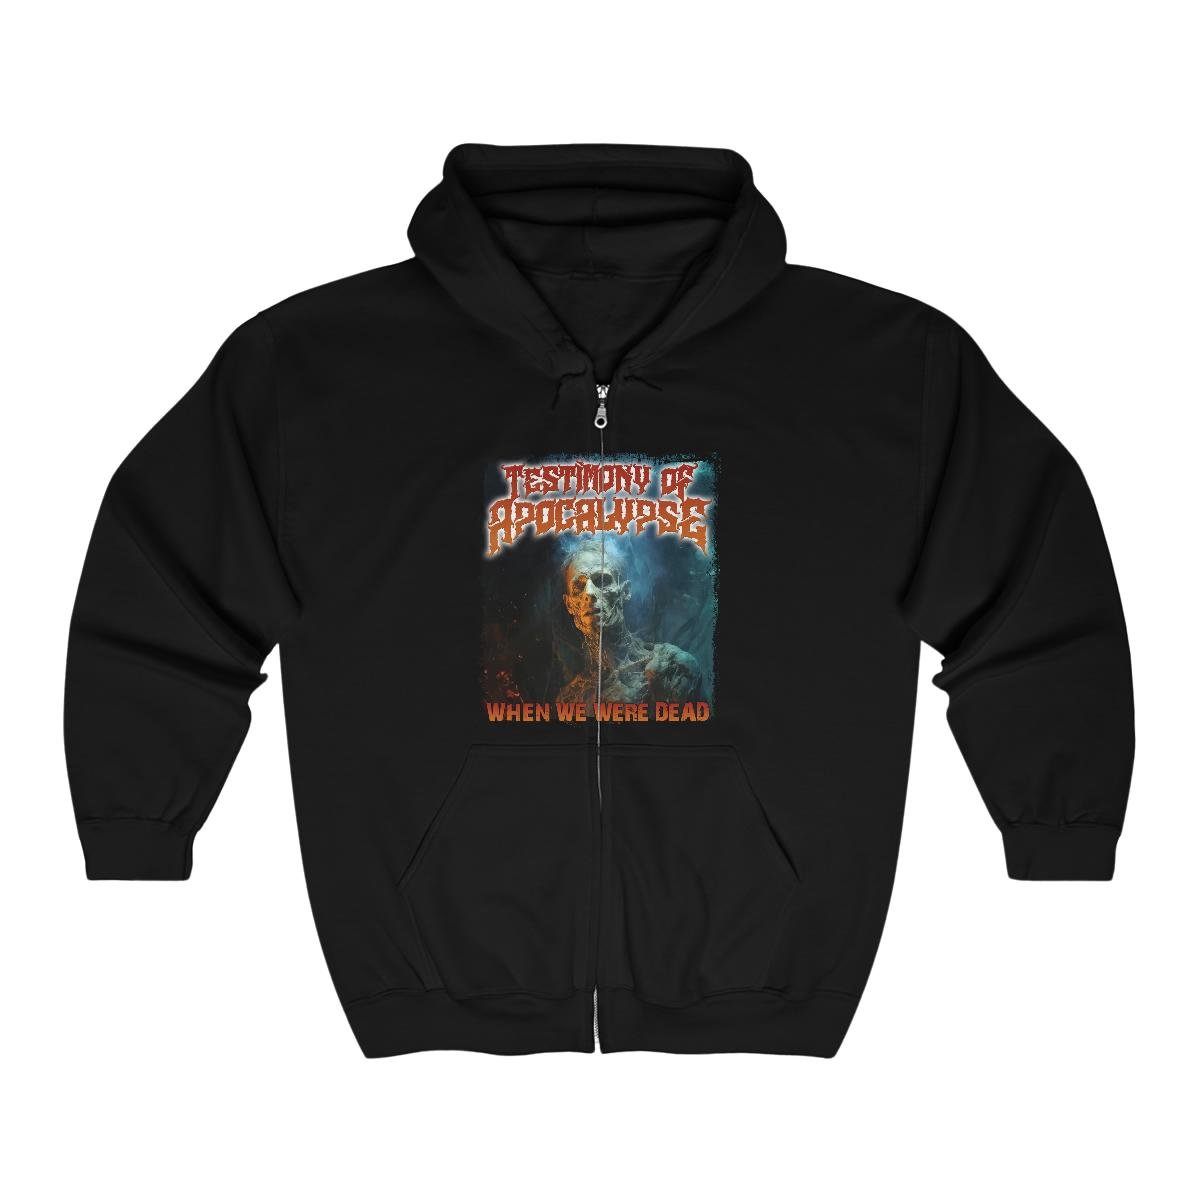 Testimony Of Apocalypse – When We Were Dead Zombie Version Full Zip Hooded Sweatshirt